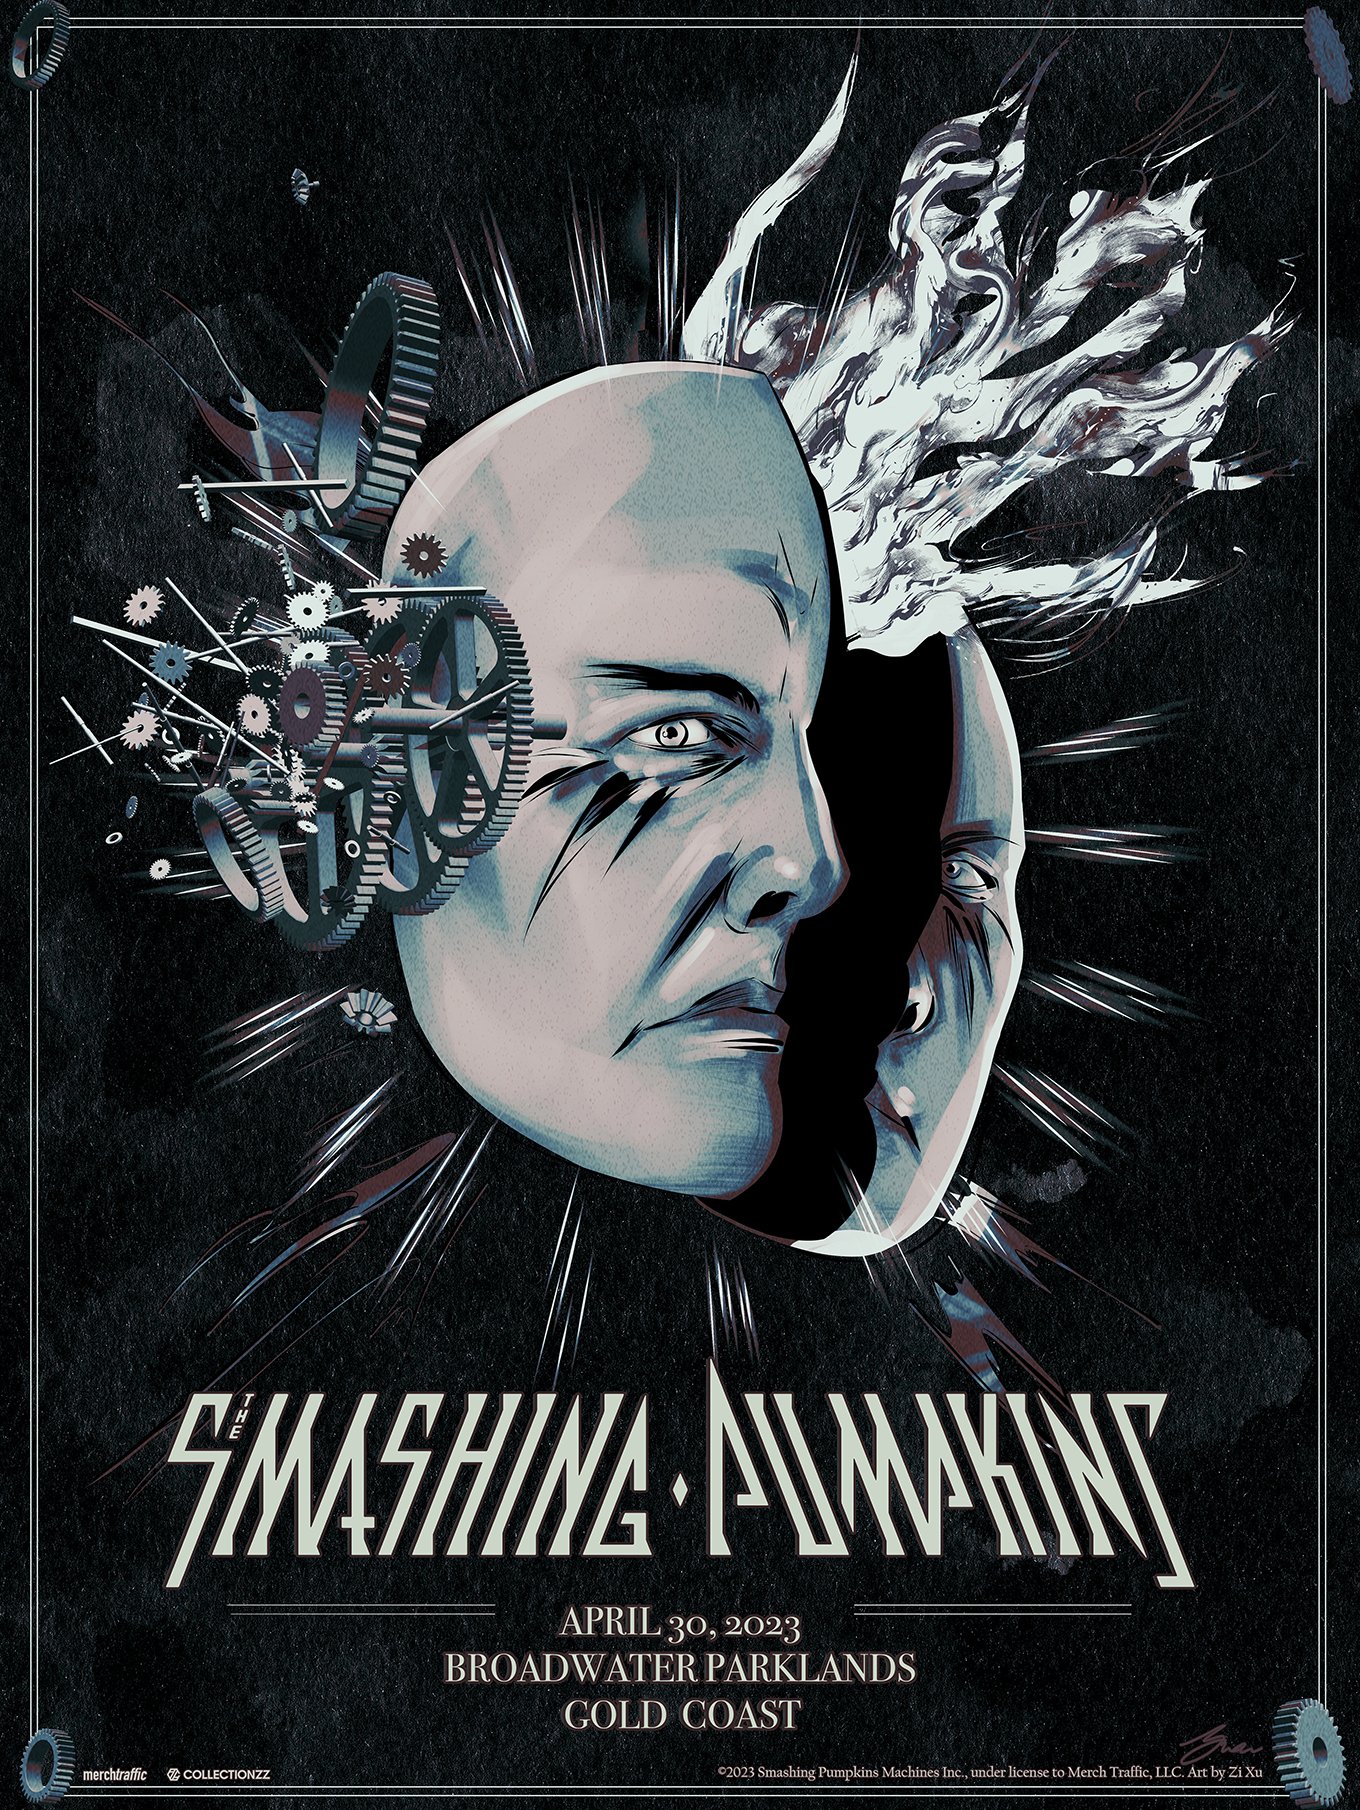   The Smashing Pumpkins - 2023 Australia Tour Poster   Client: The Smashing Pumpkins &amp; Iconic by Collectionzz (officially licensed) 